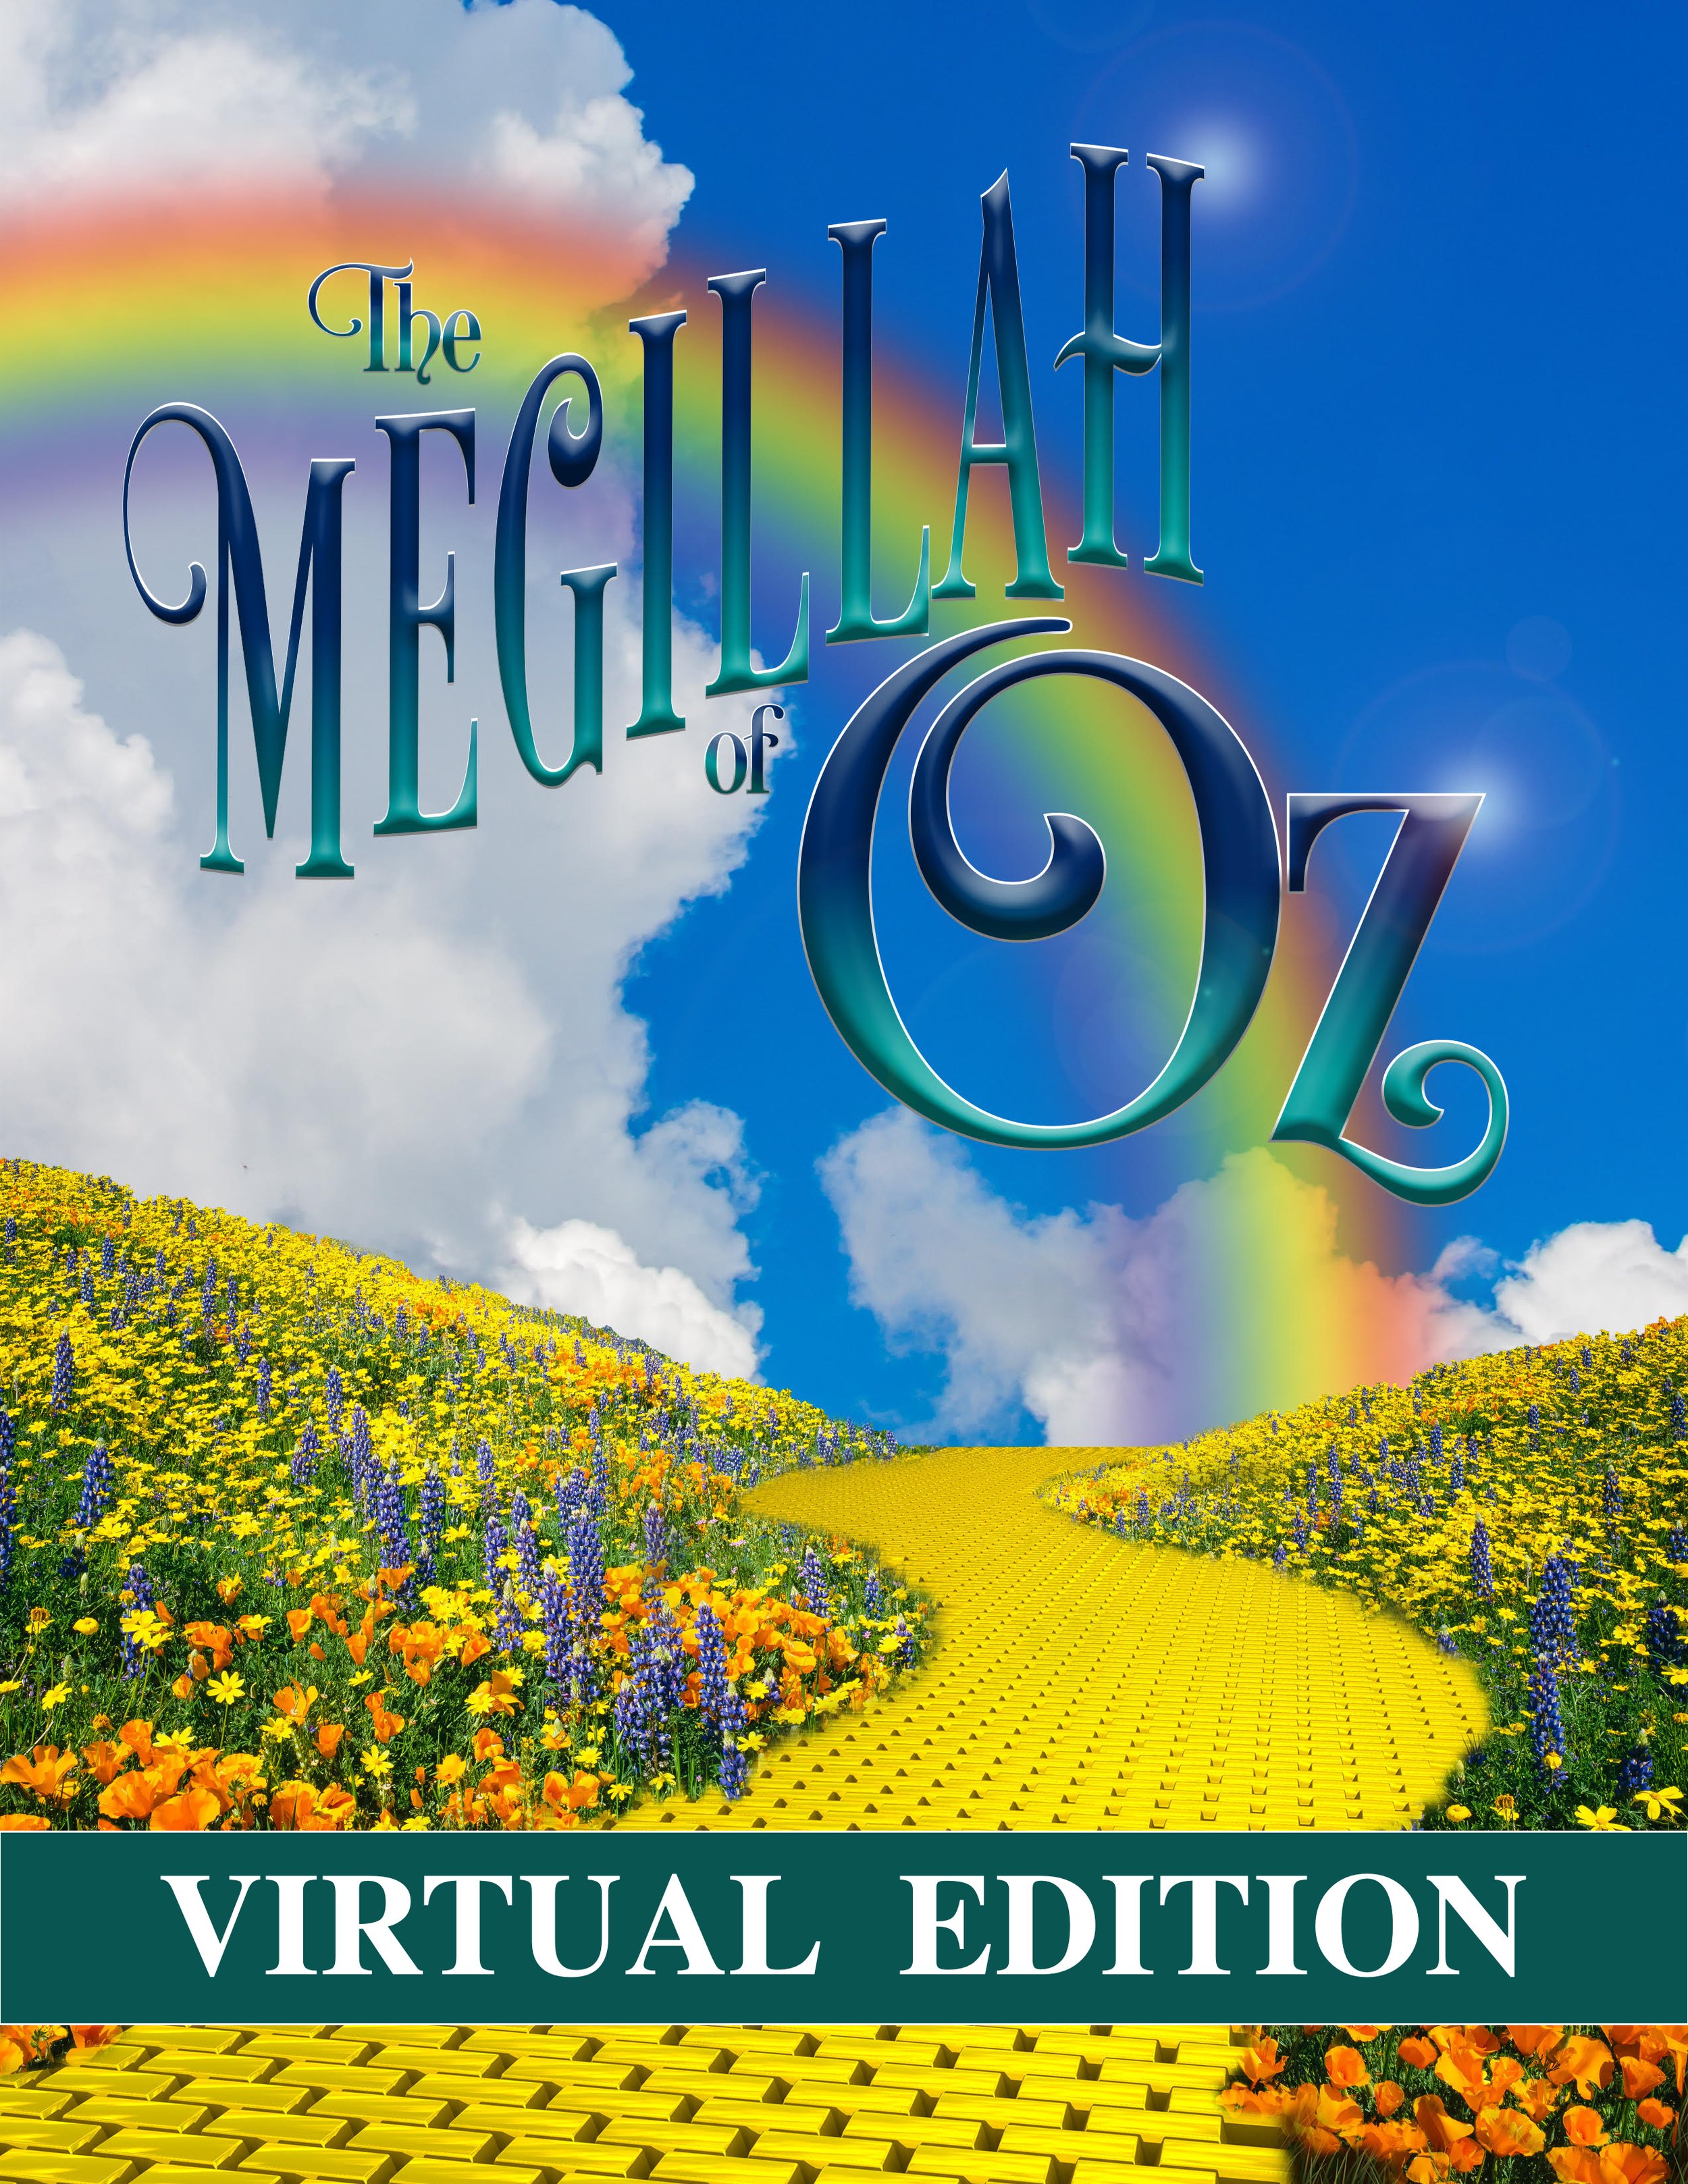 Megillah of Oz - Virtual Edition poster.jpg